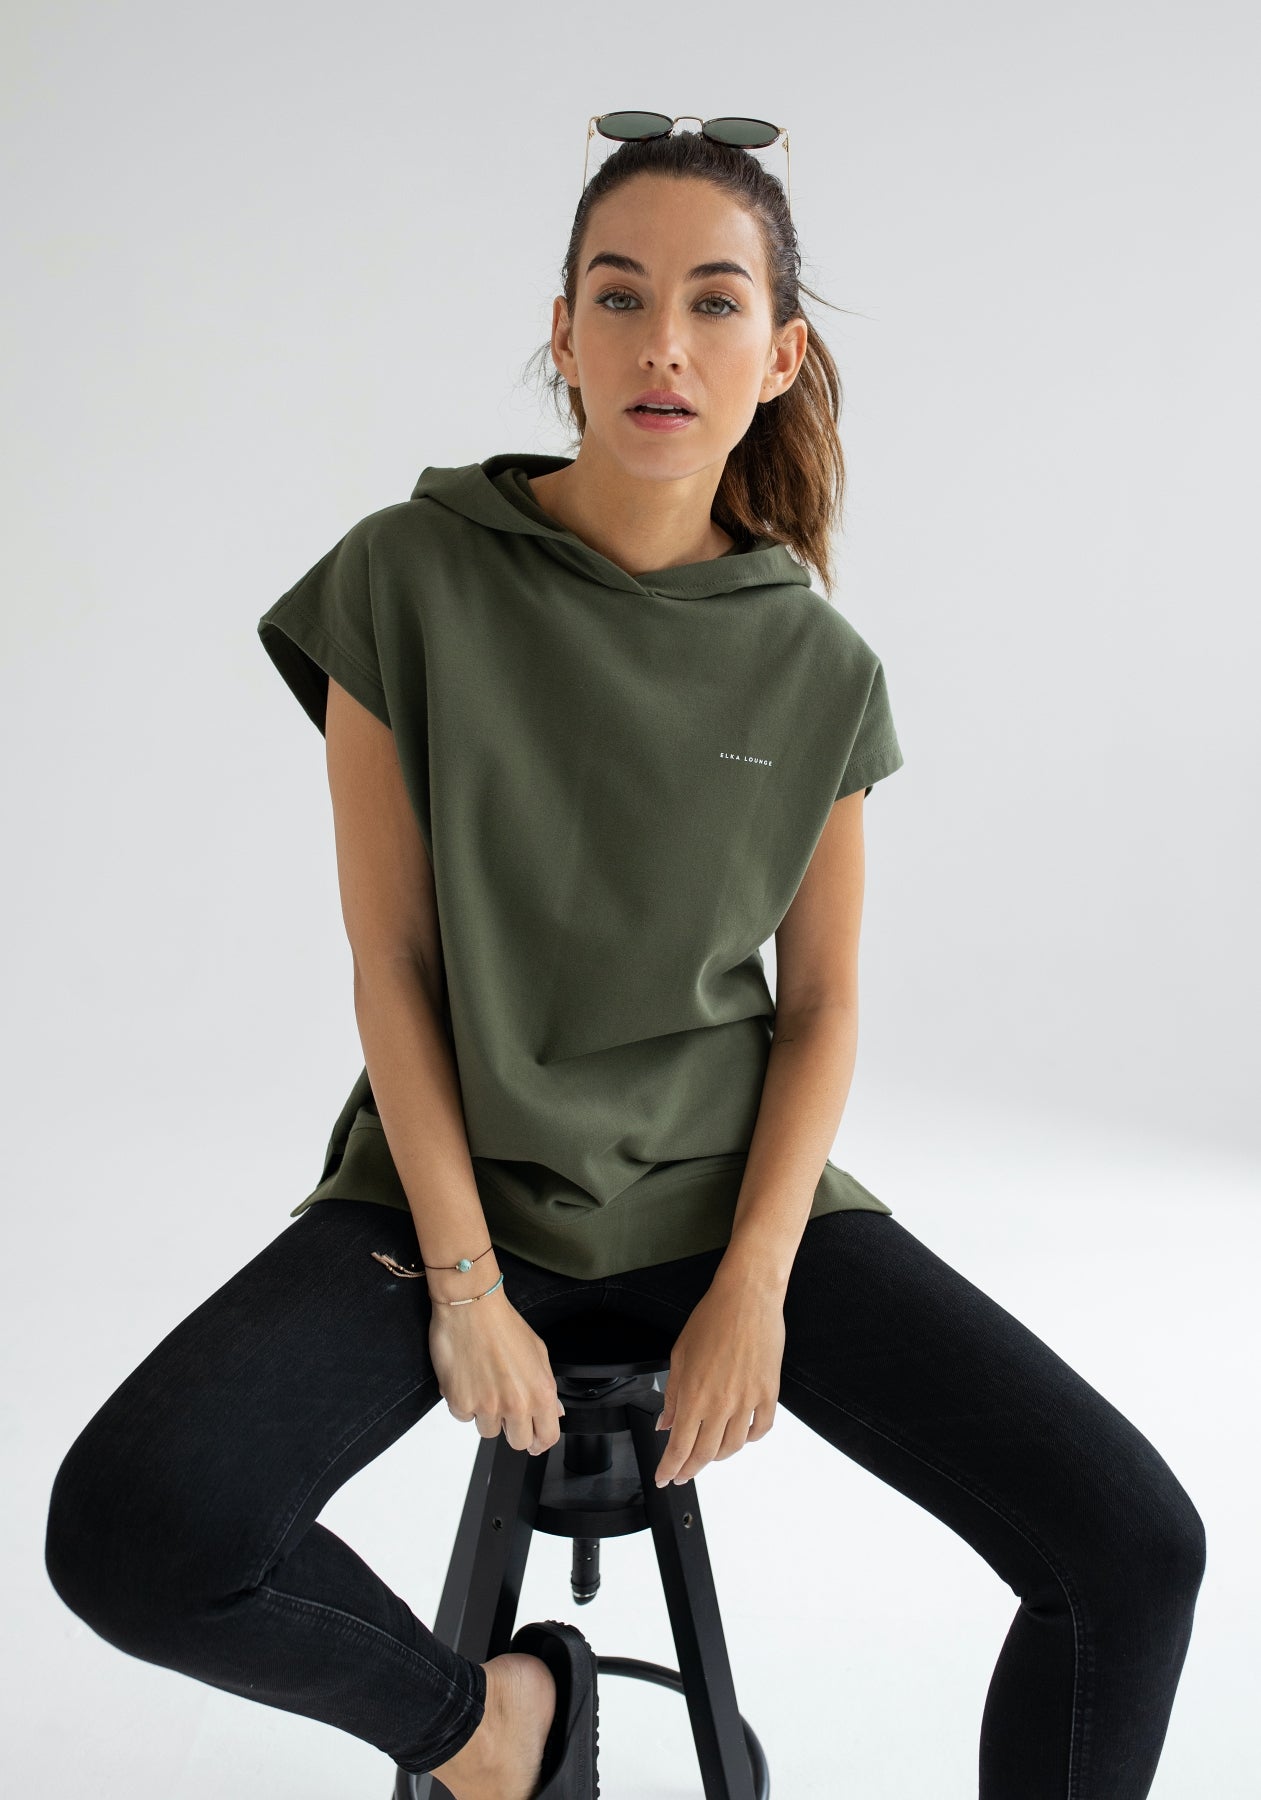 Women Sleeveless sweatshirt / vest organic cotton Moss green - Oversized